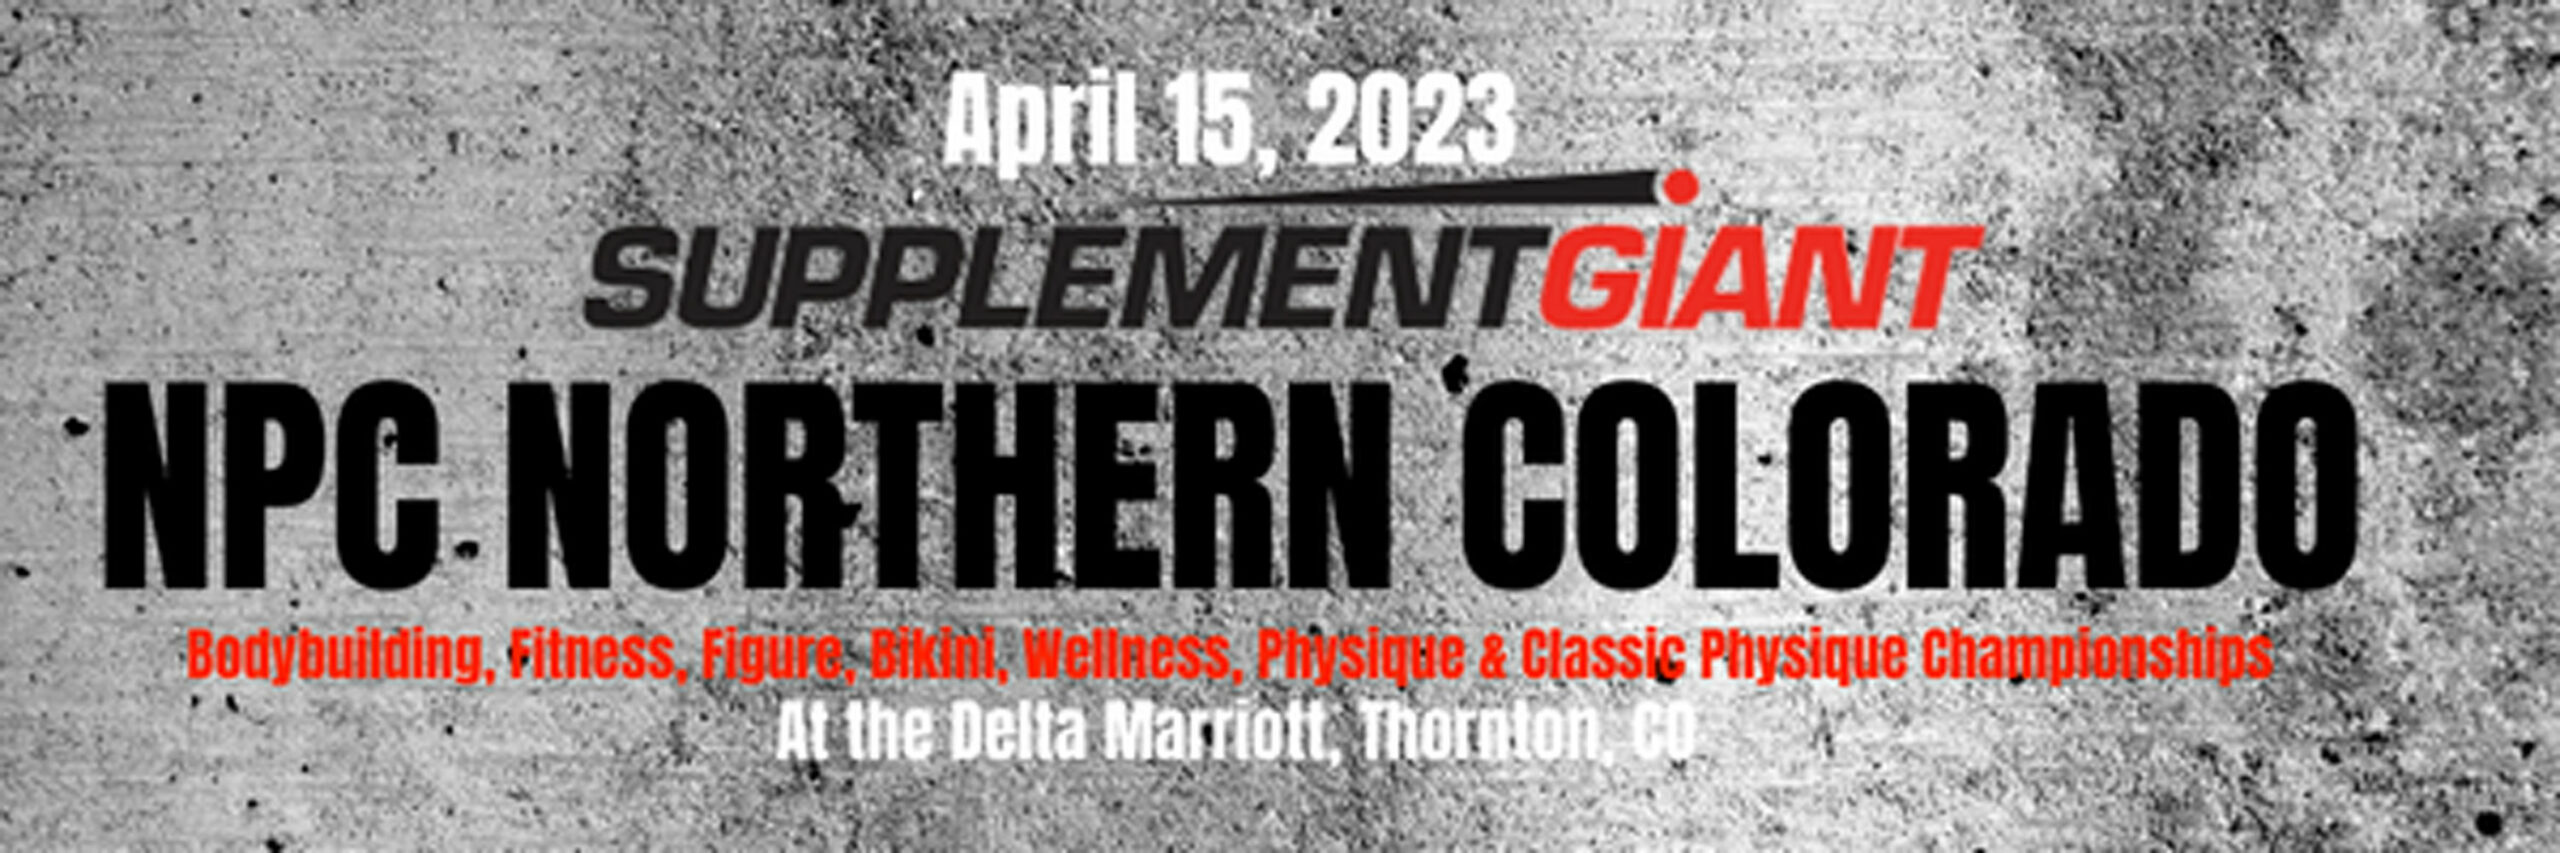 2023 NPC Supplement Giant Northern Colorado Championships NPC News Online